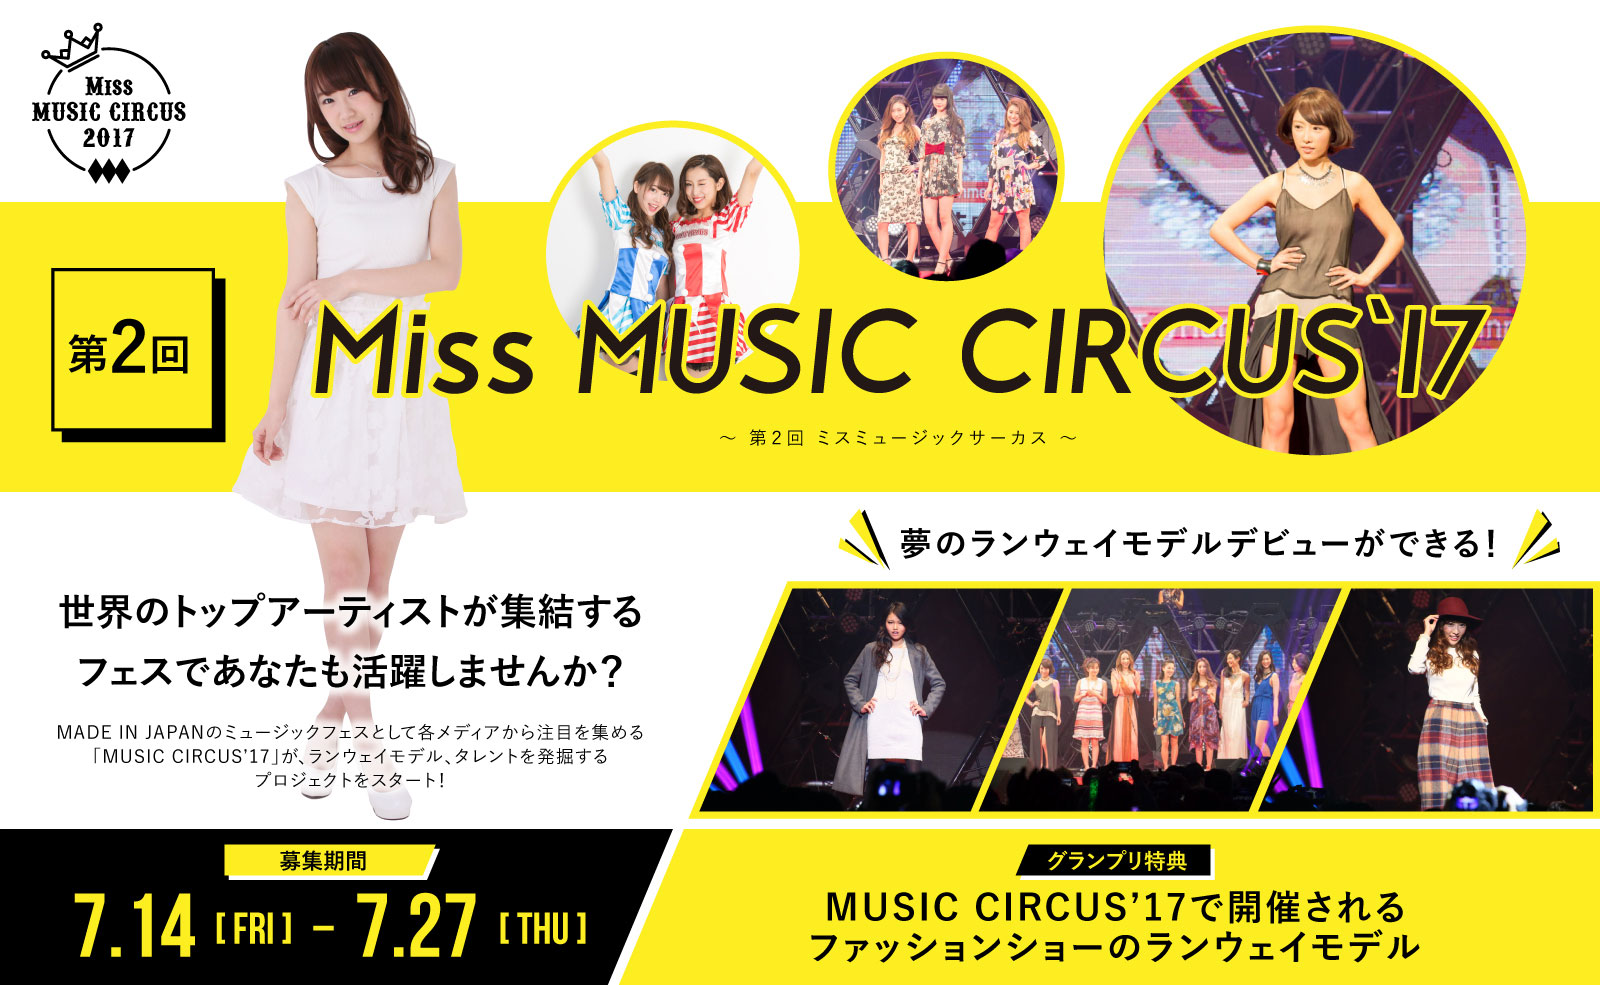 Miss MUSIC CIRCUS'17